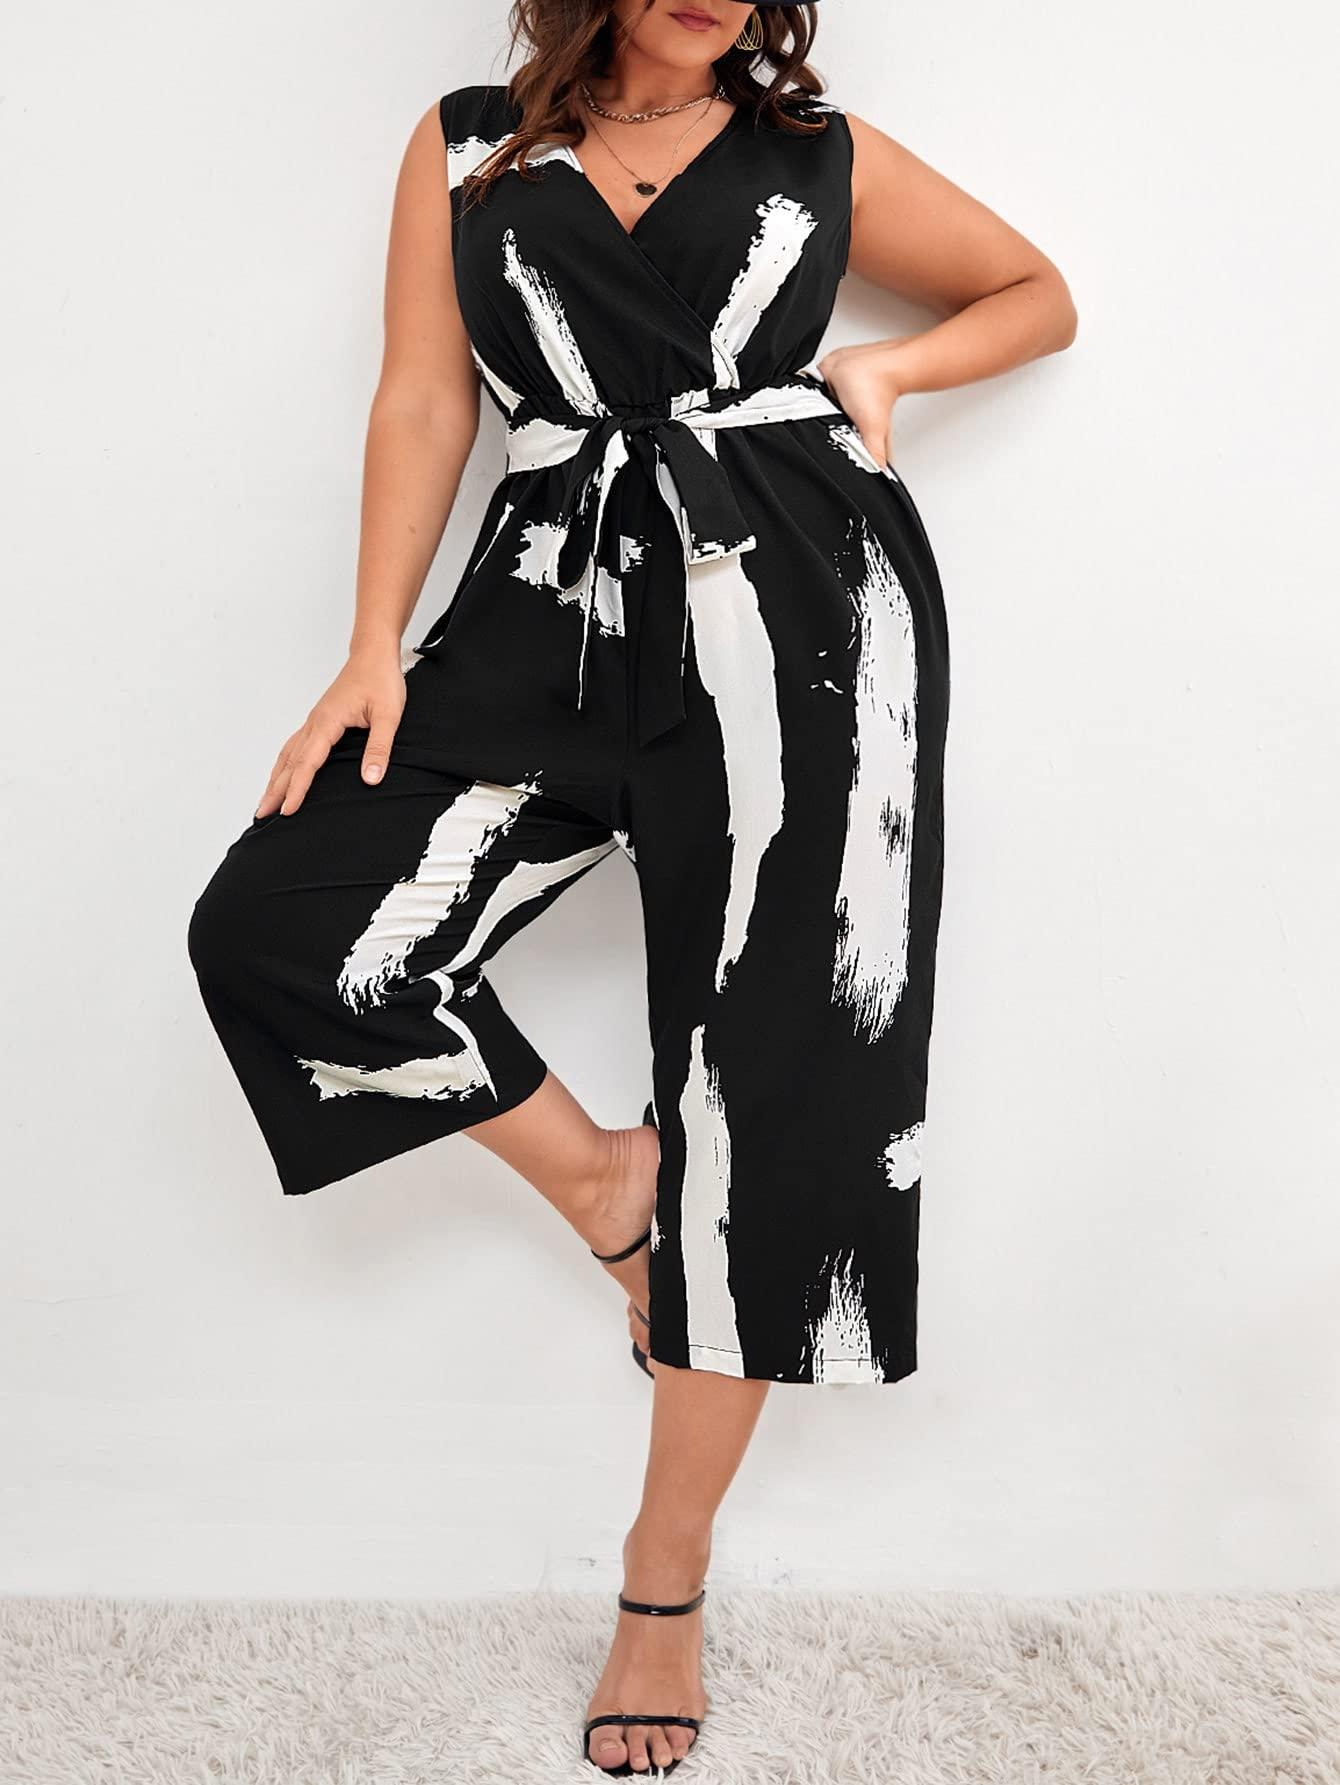 WDIRARA Women's Plus Size Brush Print Wrap V Neck Sleeveless Tie Tank Jumpsuit Black White 3XL - Bona Fide Fashion